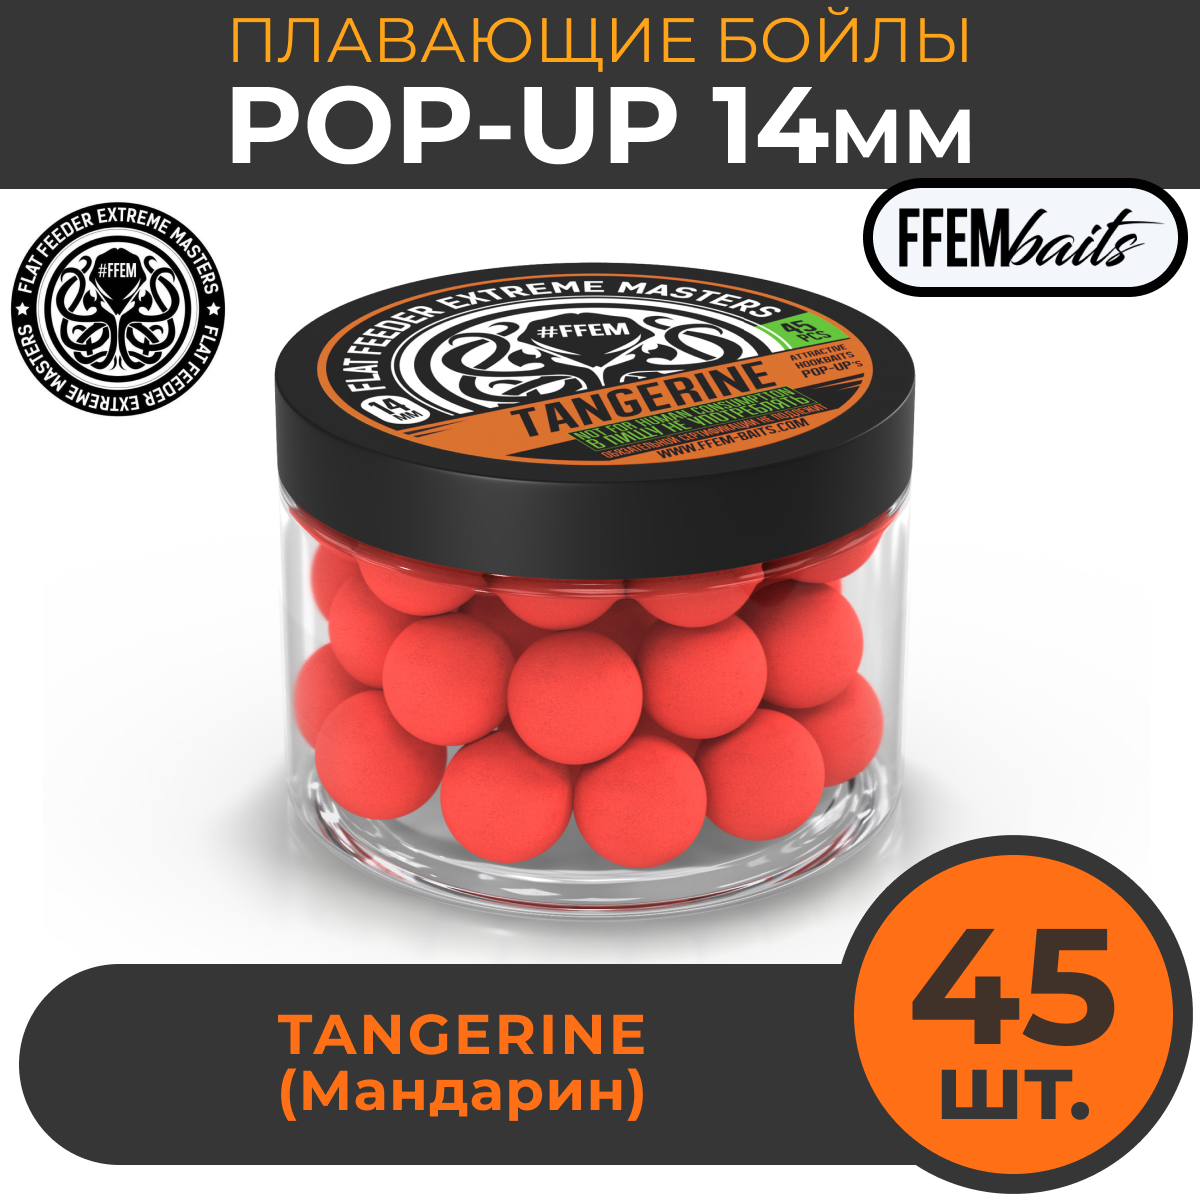 Плавающие бойлы POP-UP 14 мм Tangerine Мандарин 150мл (45шт) супер аттрактивные плавающие насадочные бойлы поп-ап / FFEM Поп ап 14мм